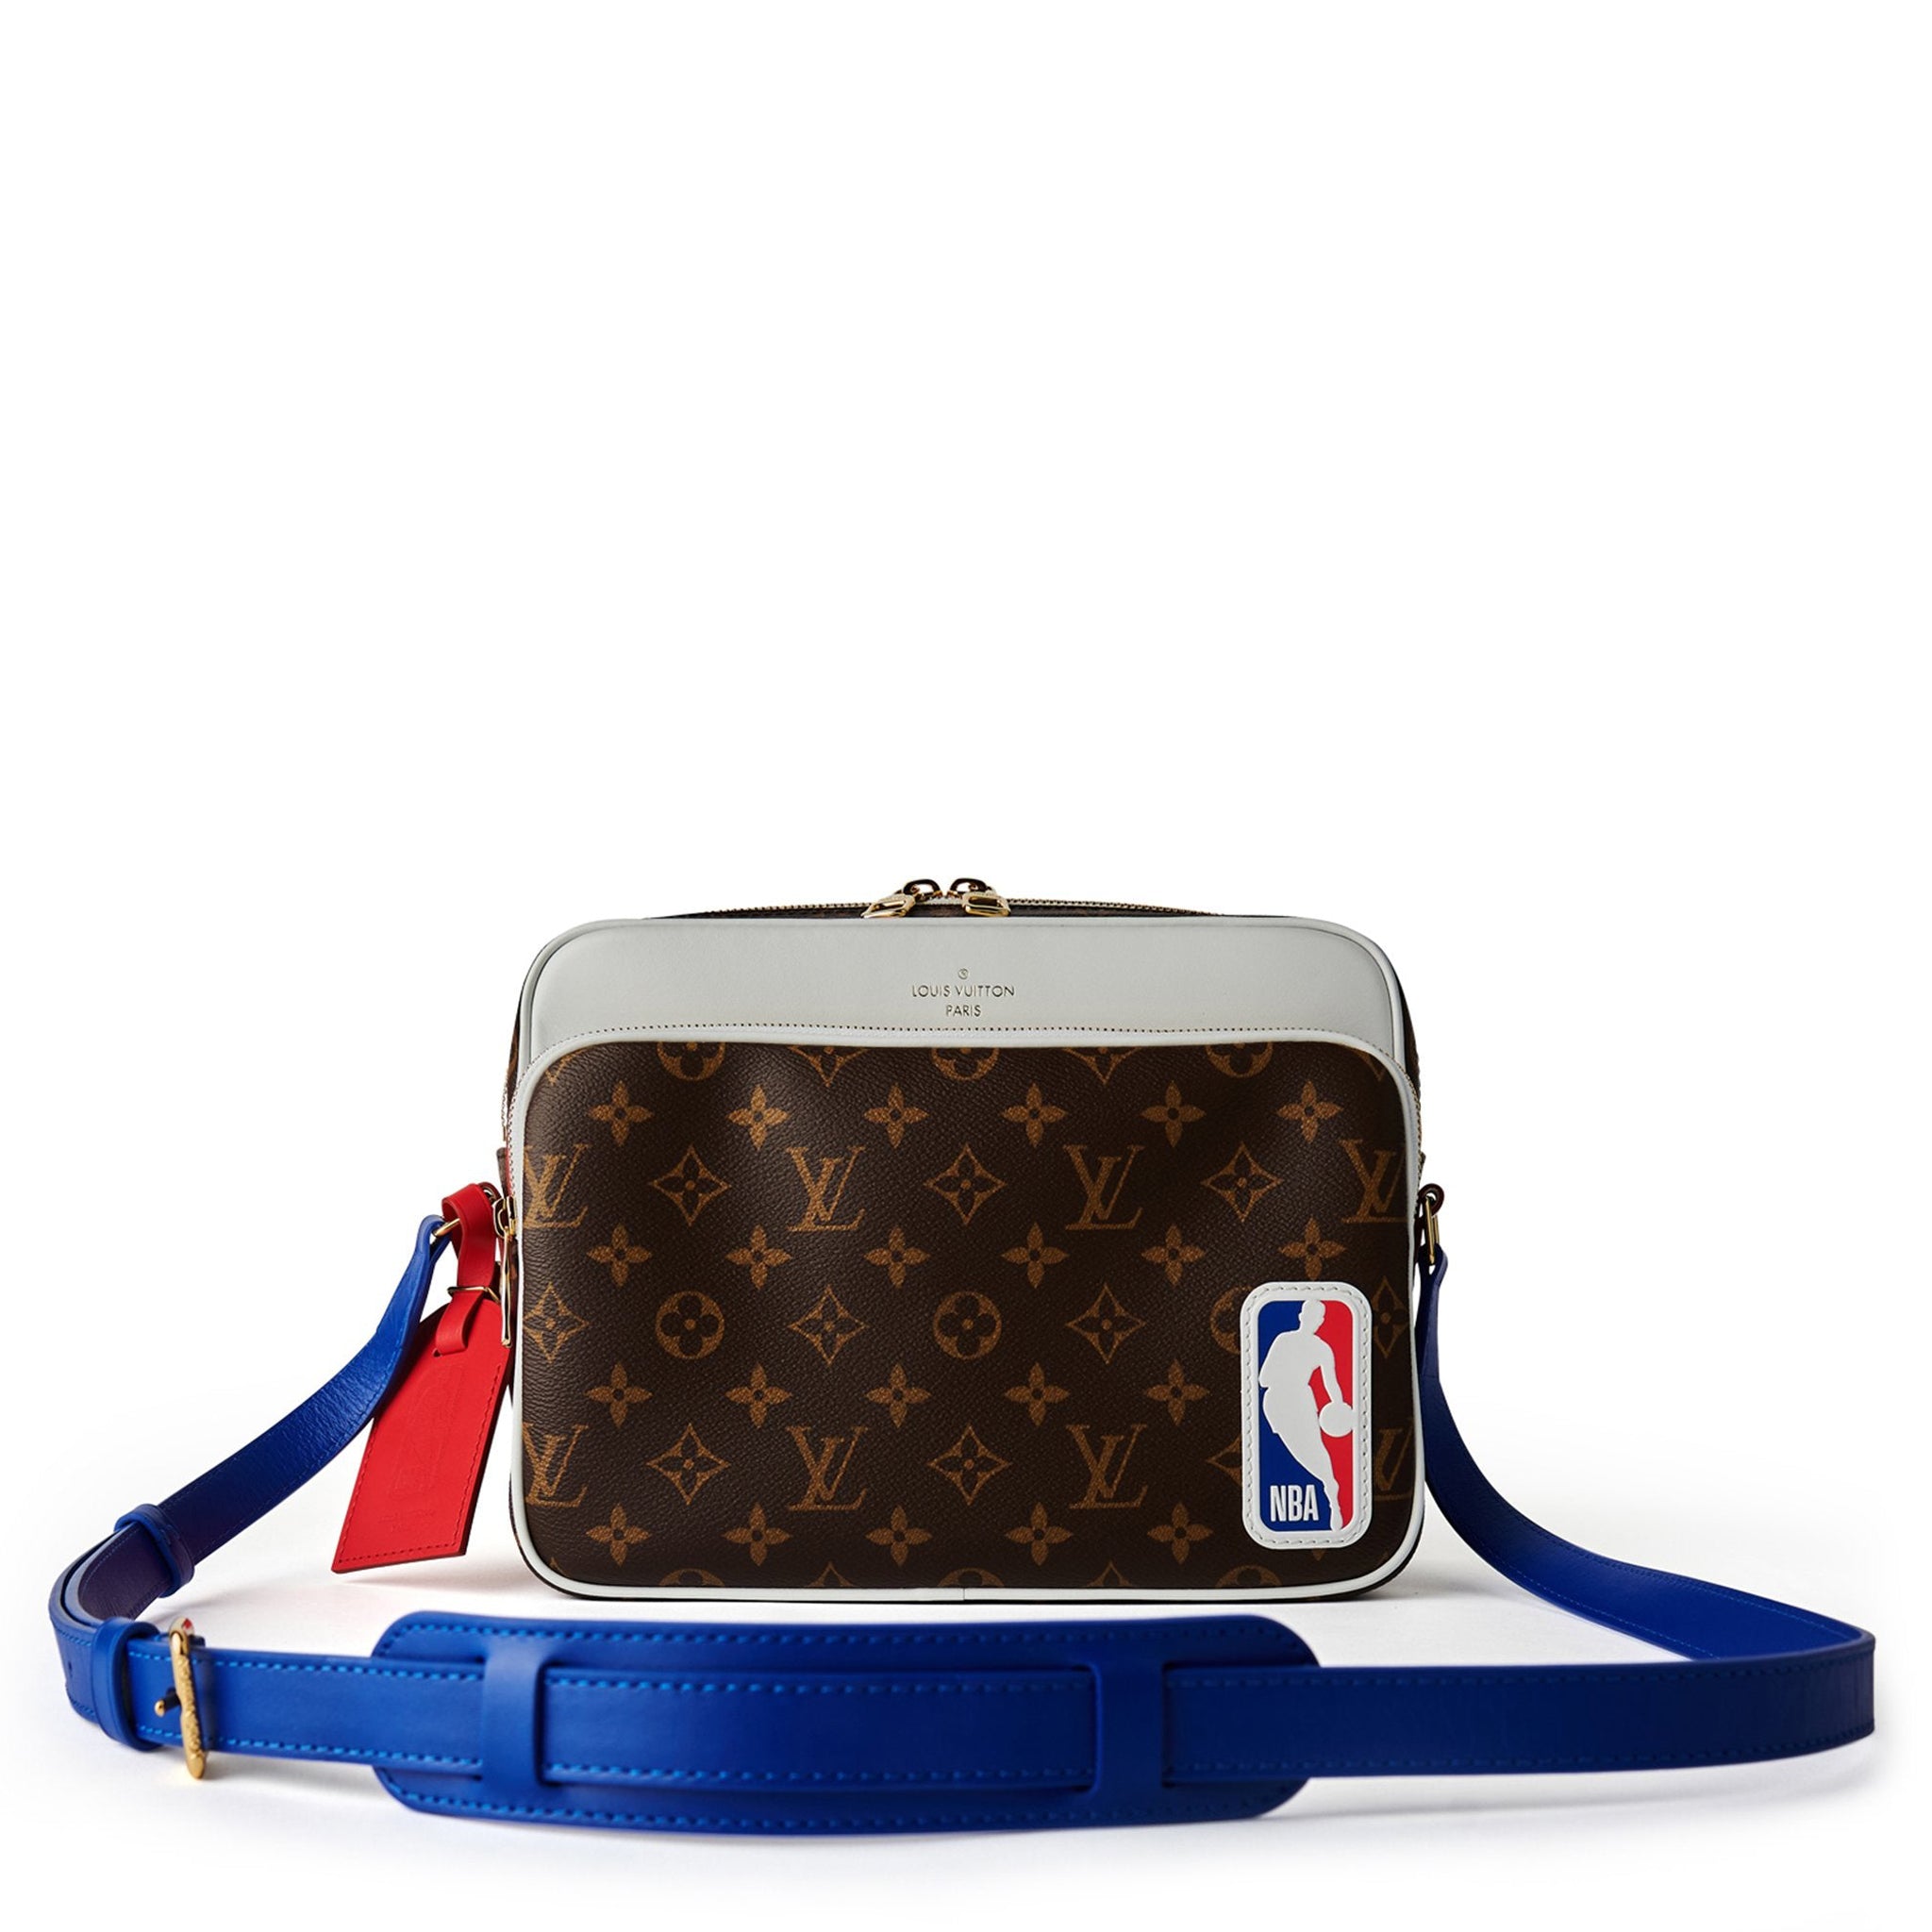 Louis Vuitton x NBA 2020 see Virgil Ablohs basketballinspired collection